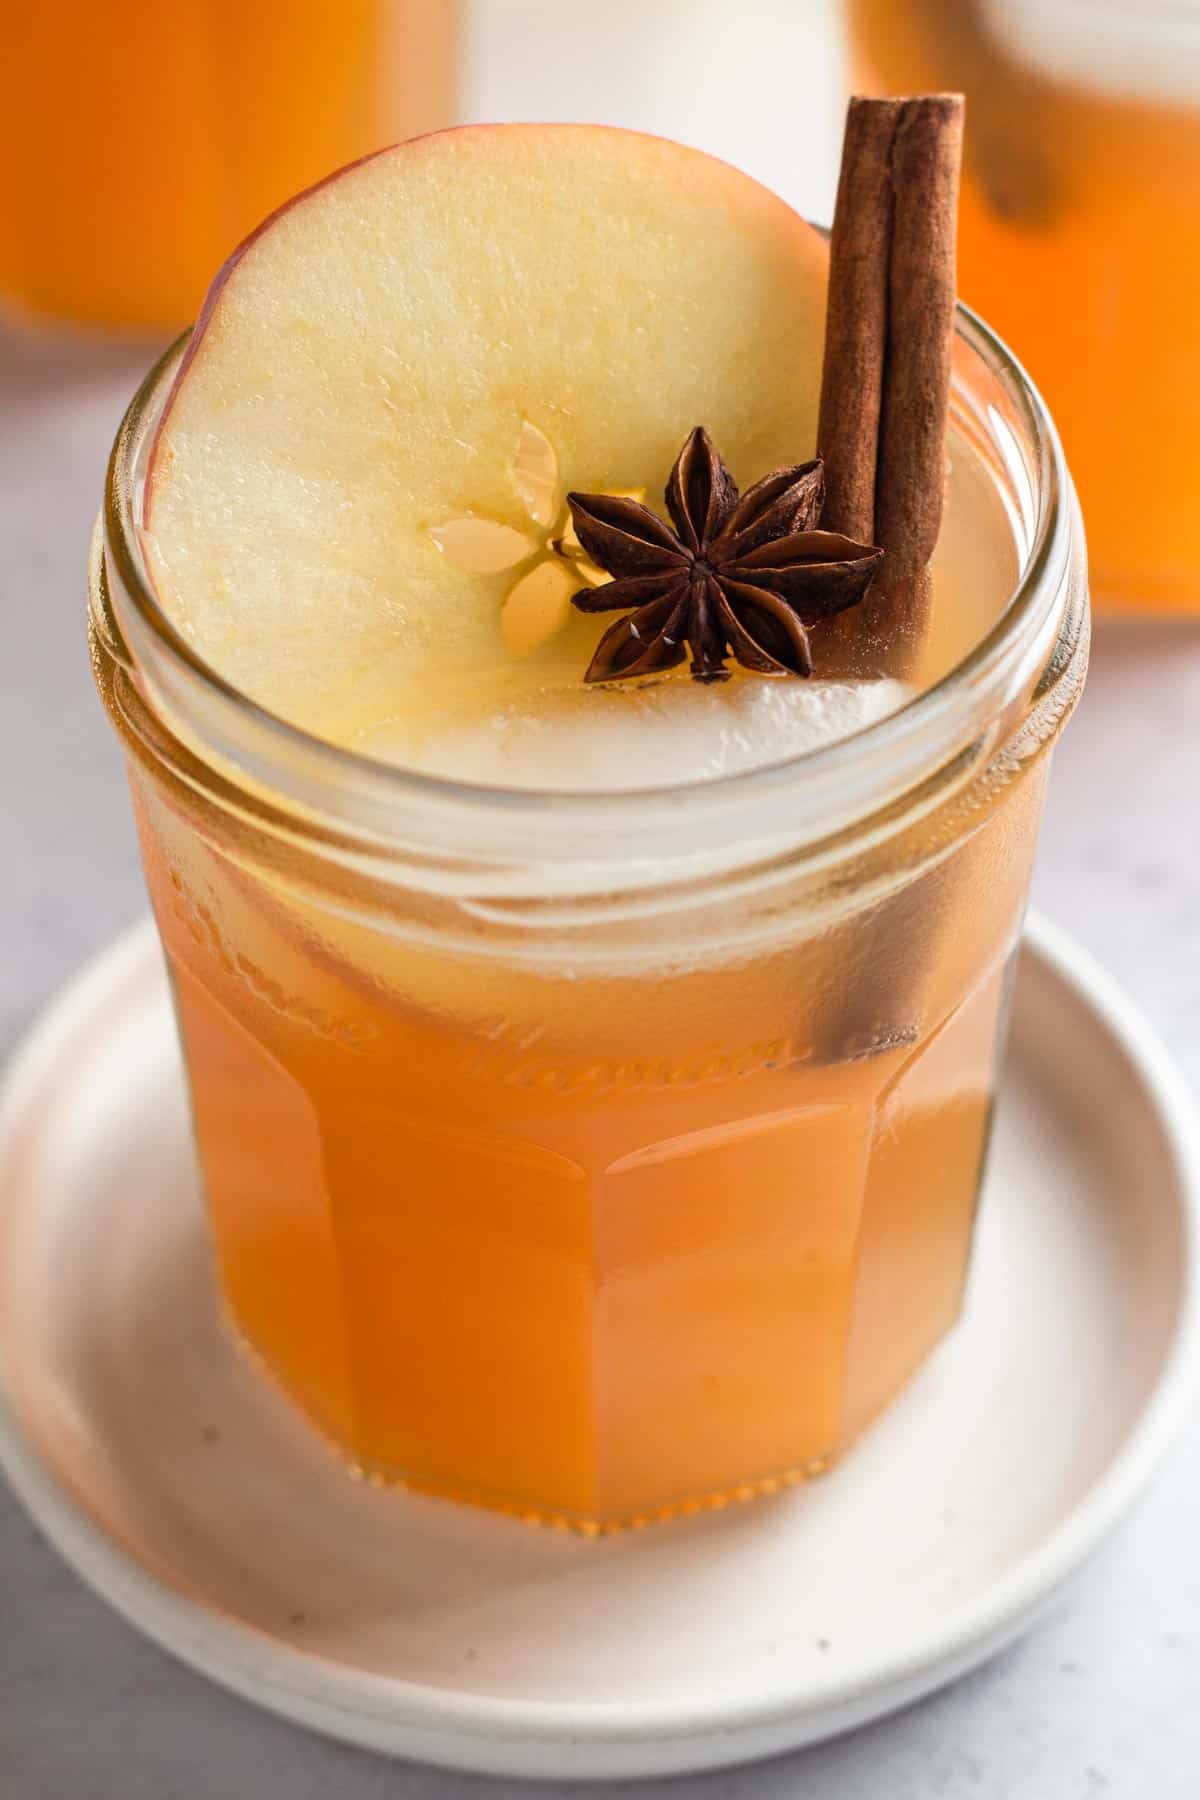 pineapple apple cider cocktail with cinnamon stick.